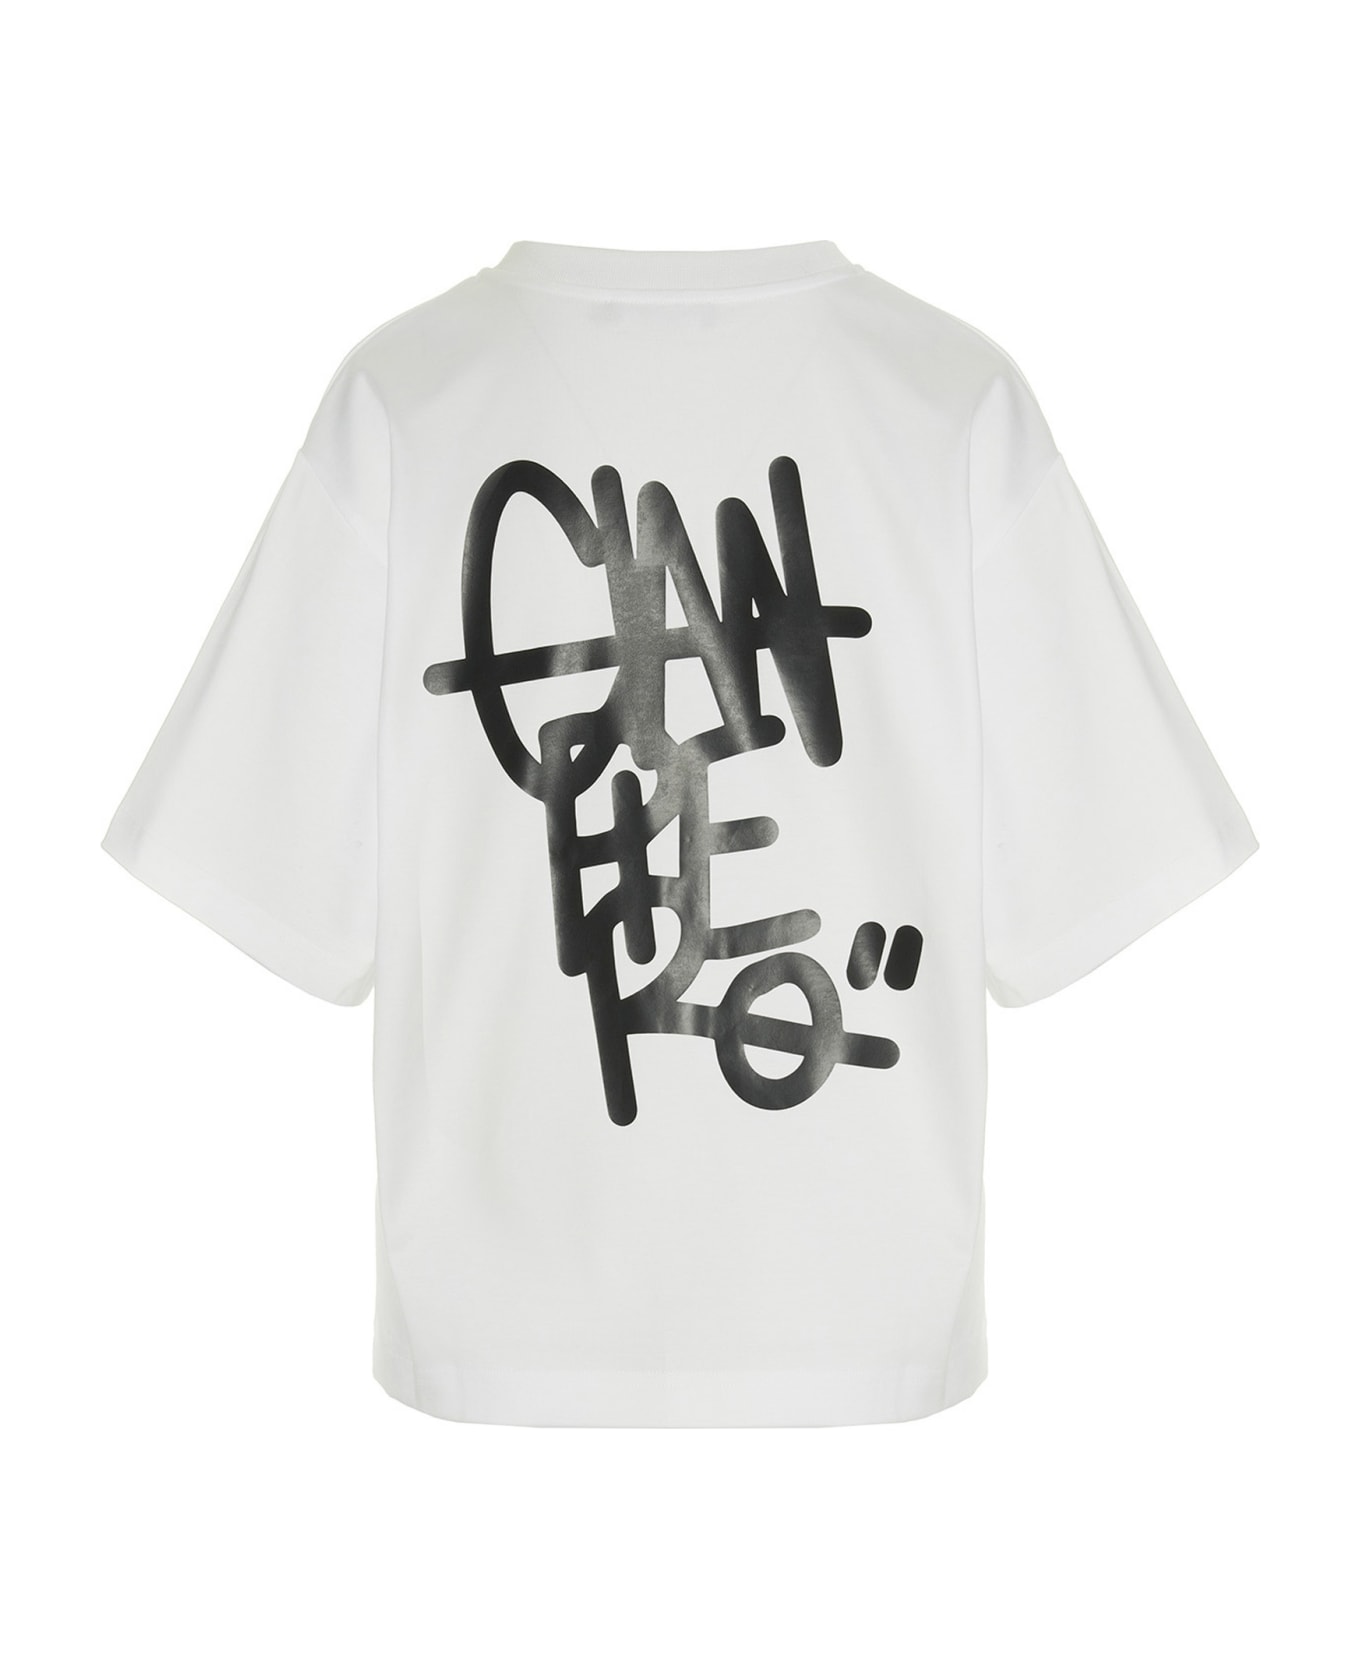 Dolce & Gabbana Gianpiero D'alessandro Collab T-shirt - White